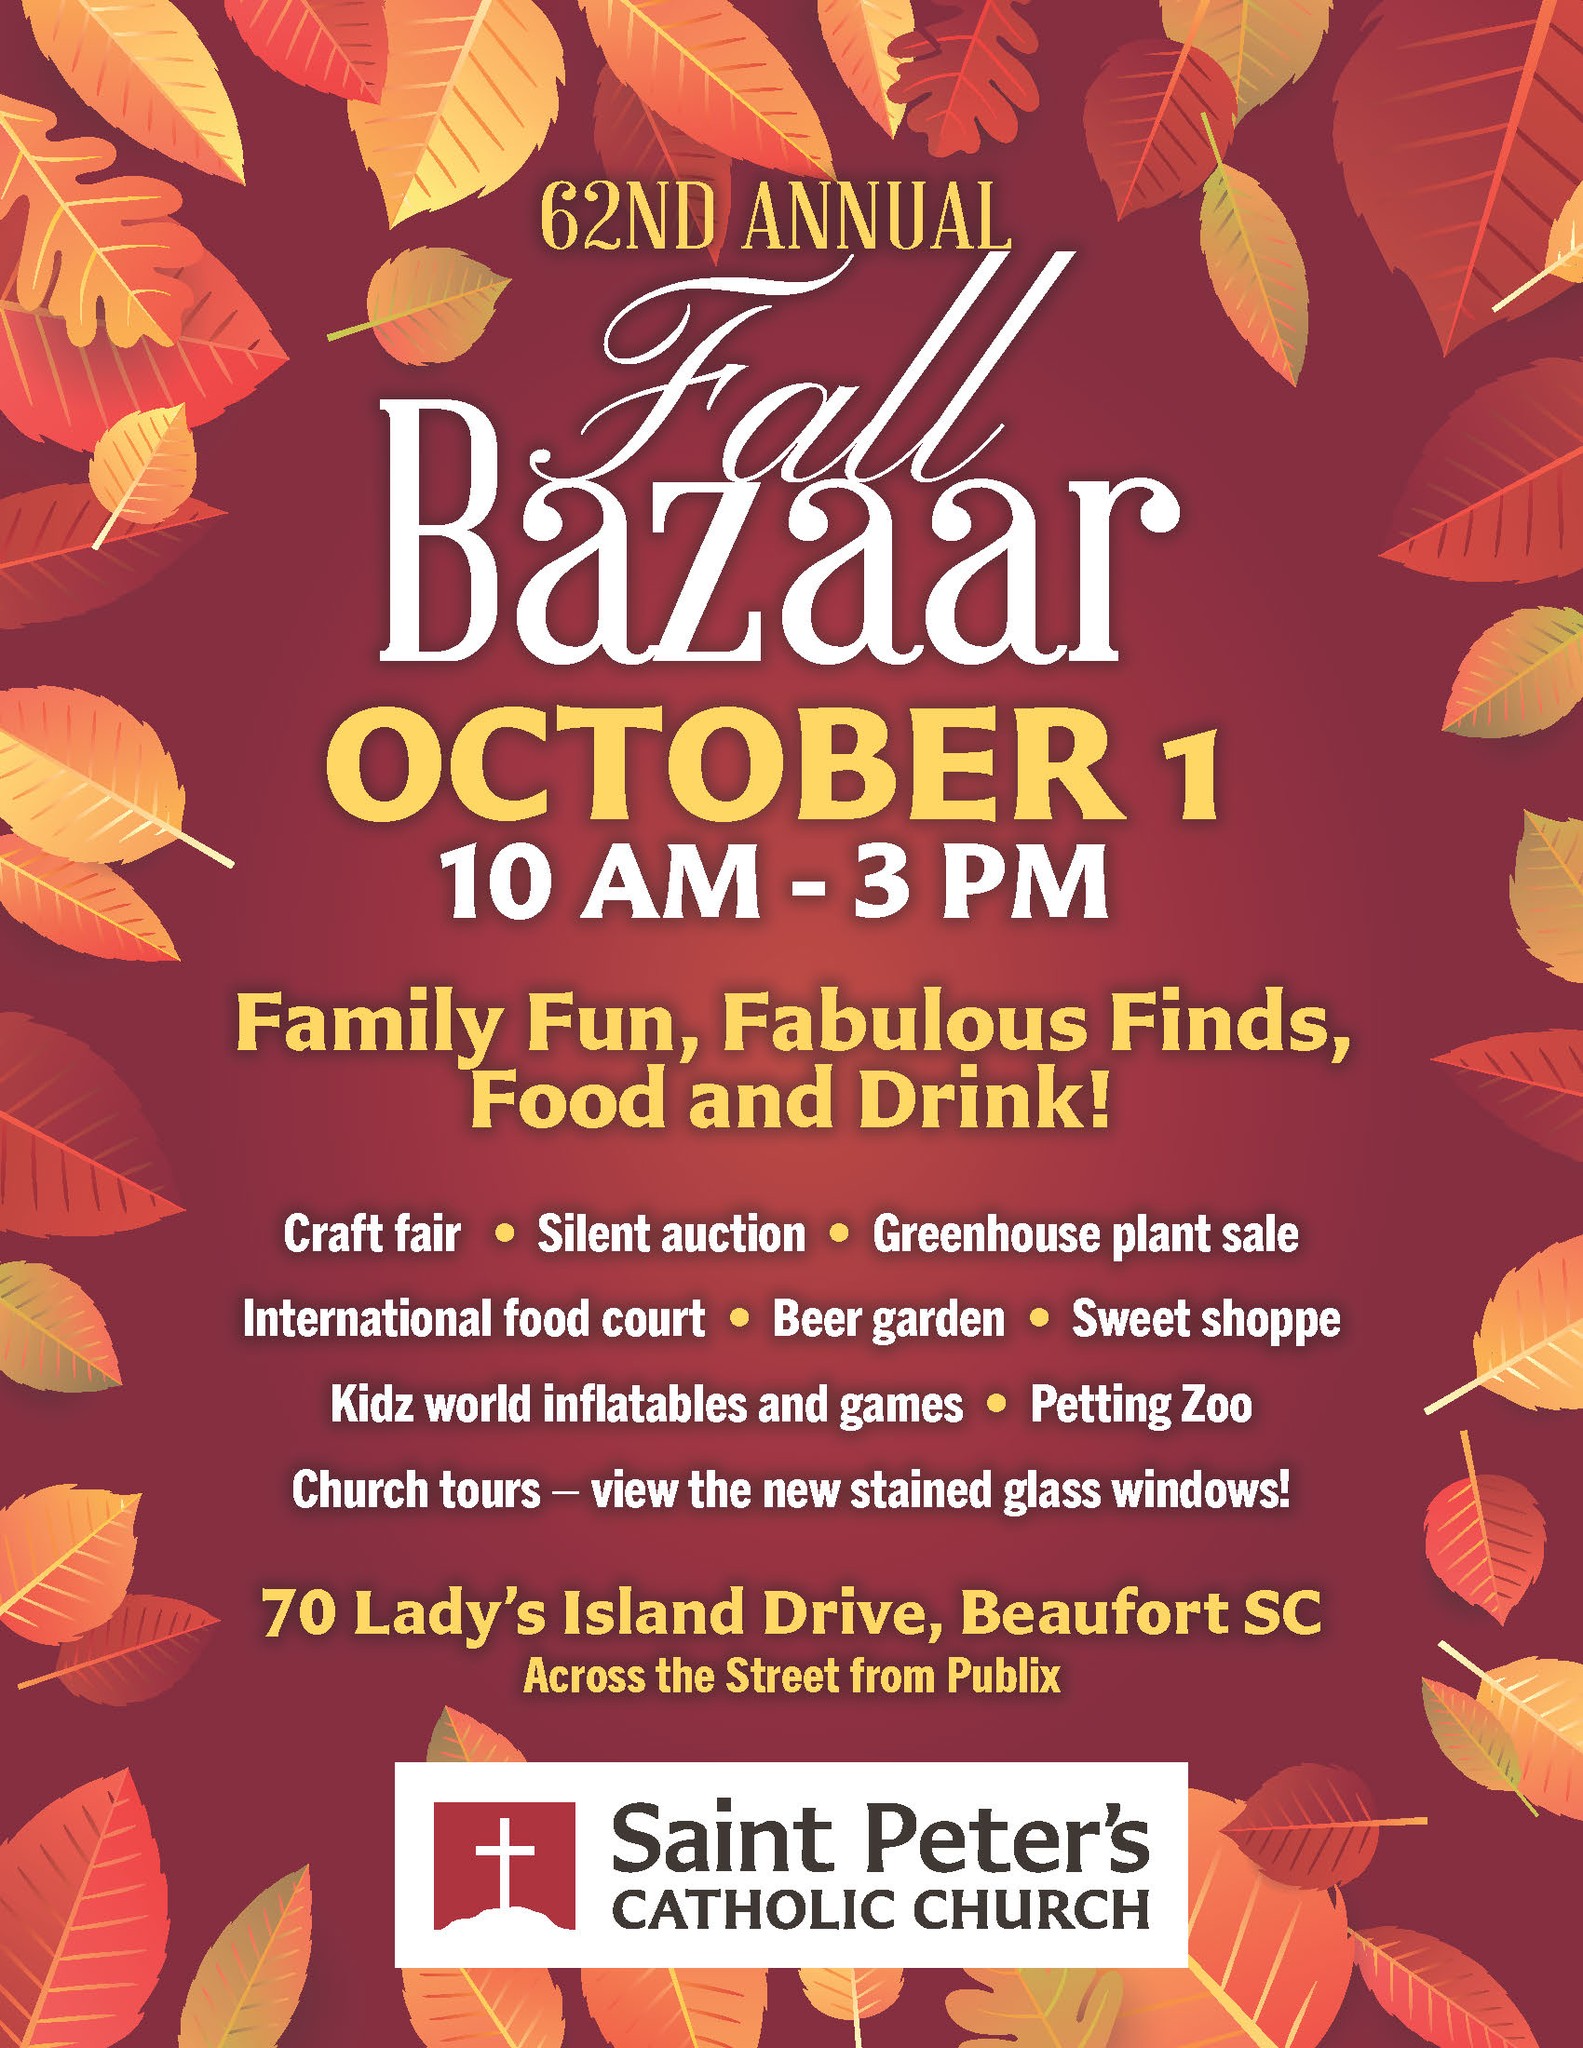 St. Peter’s Church huge annual Fall Bazaar coming October 1st Explore